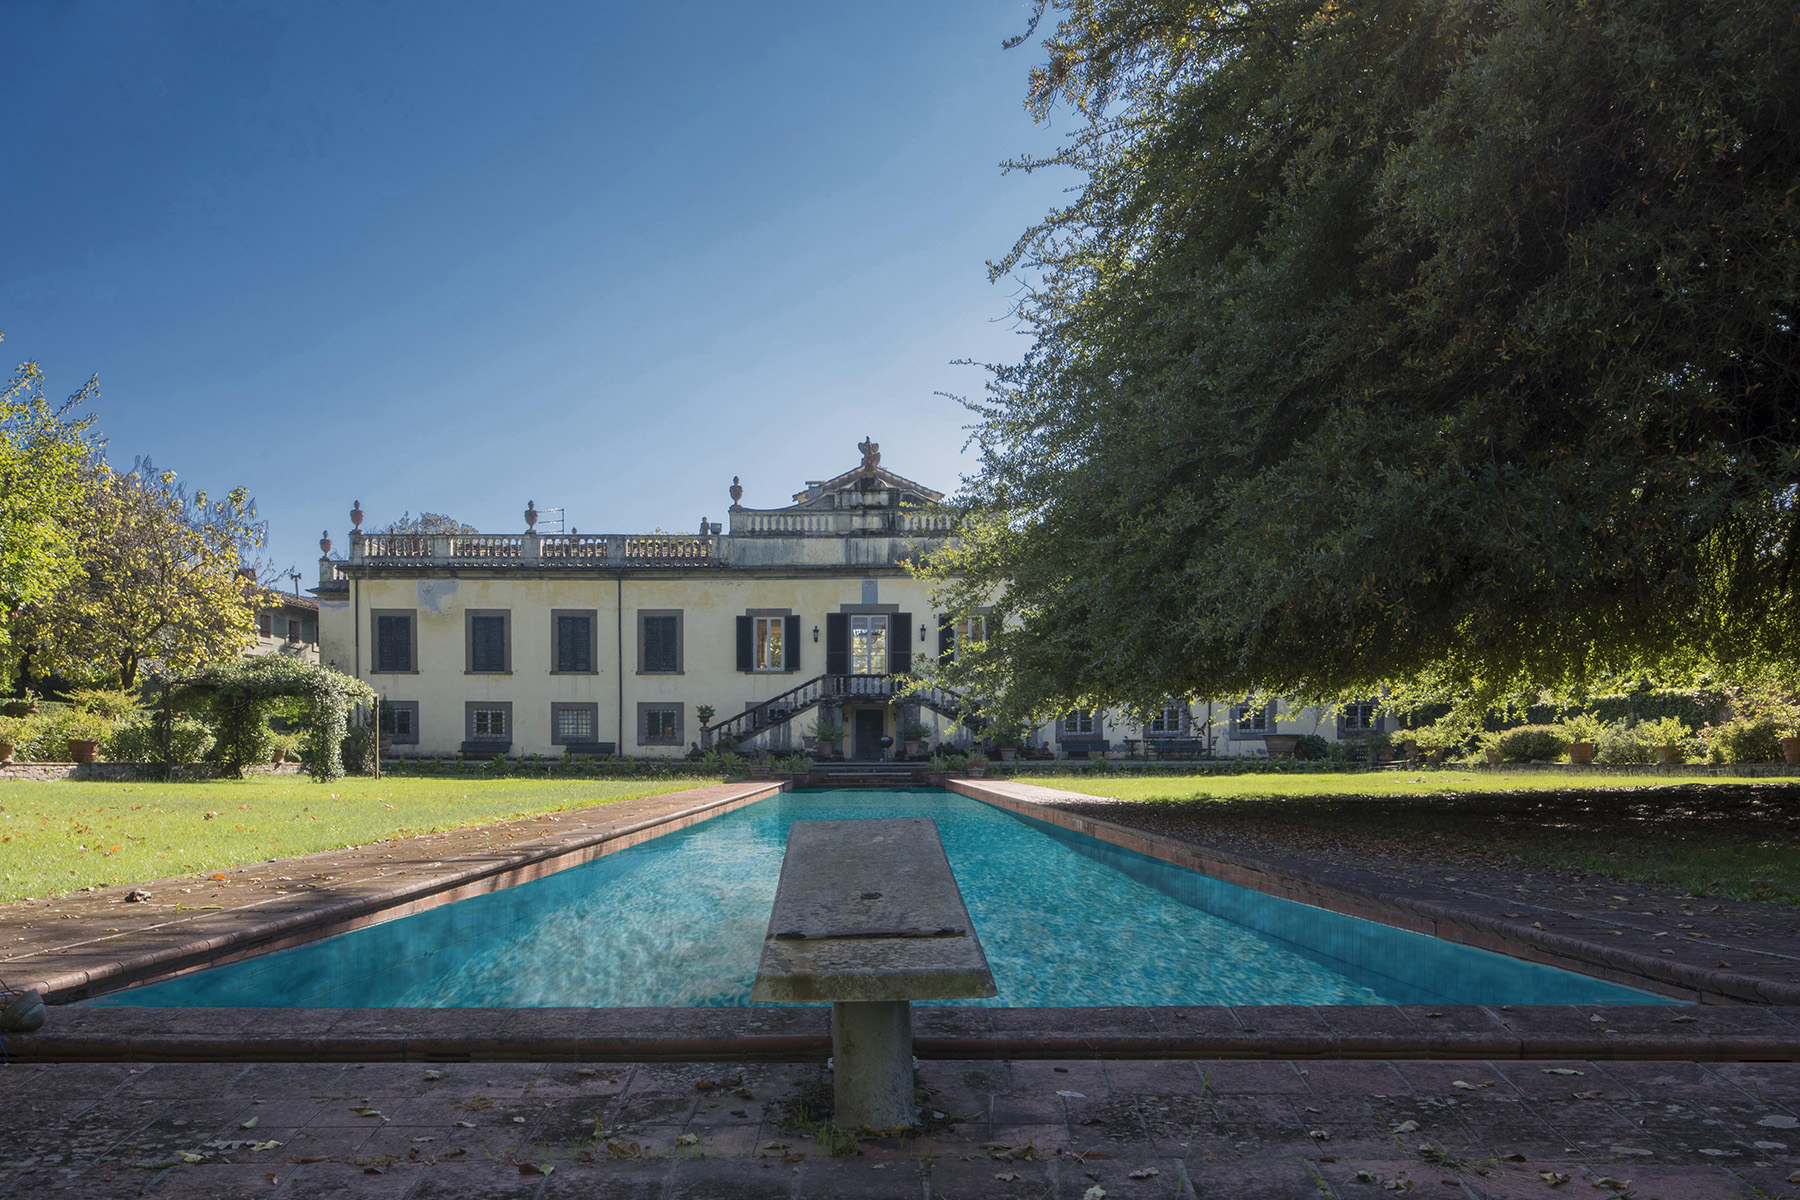 Villa in Vendita a Lucca: 5 locali, 2451 mq - Foto 1